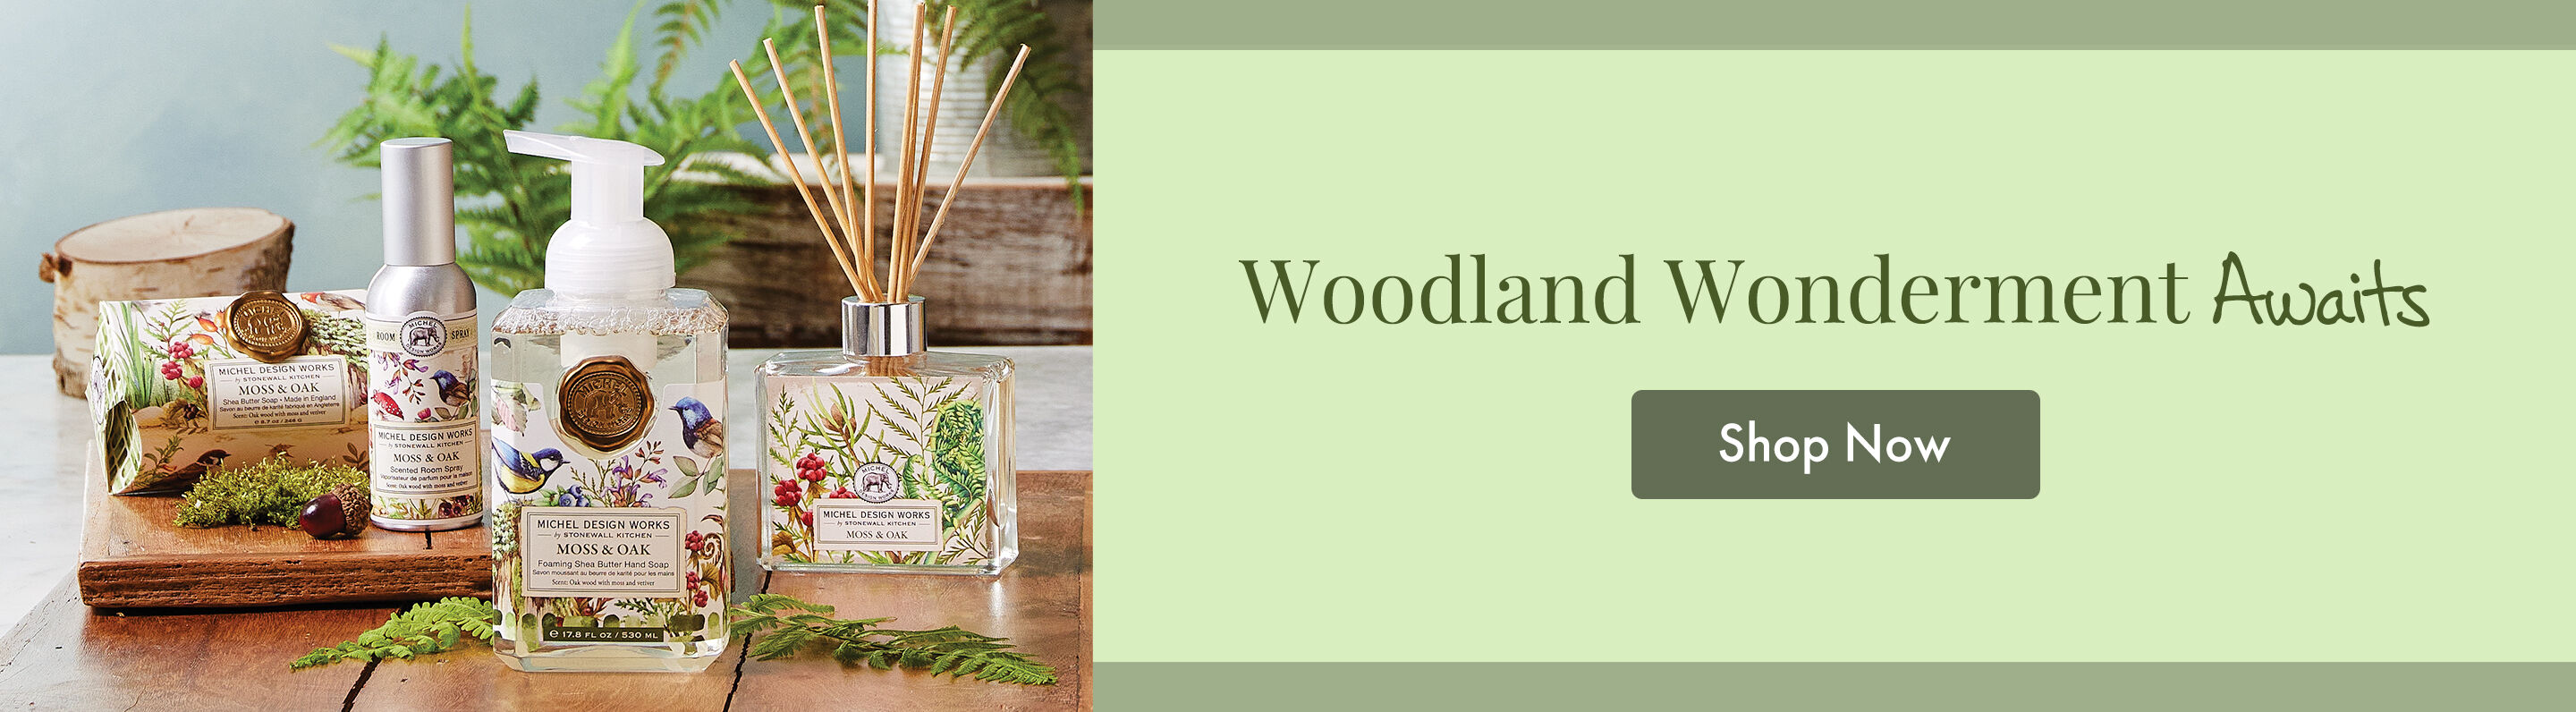 Woodland Wonderment Awaits - Shop Now